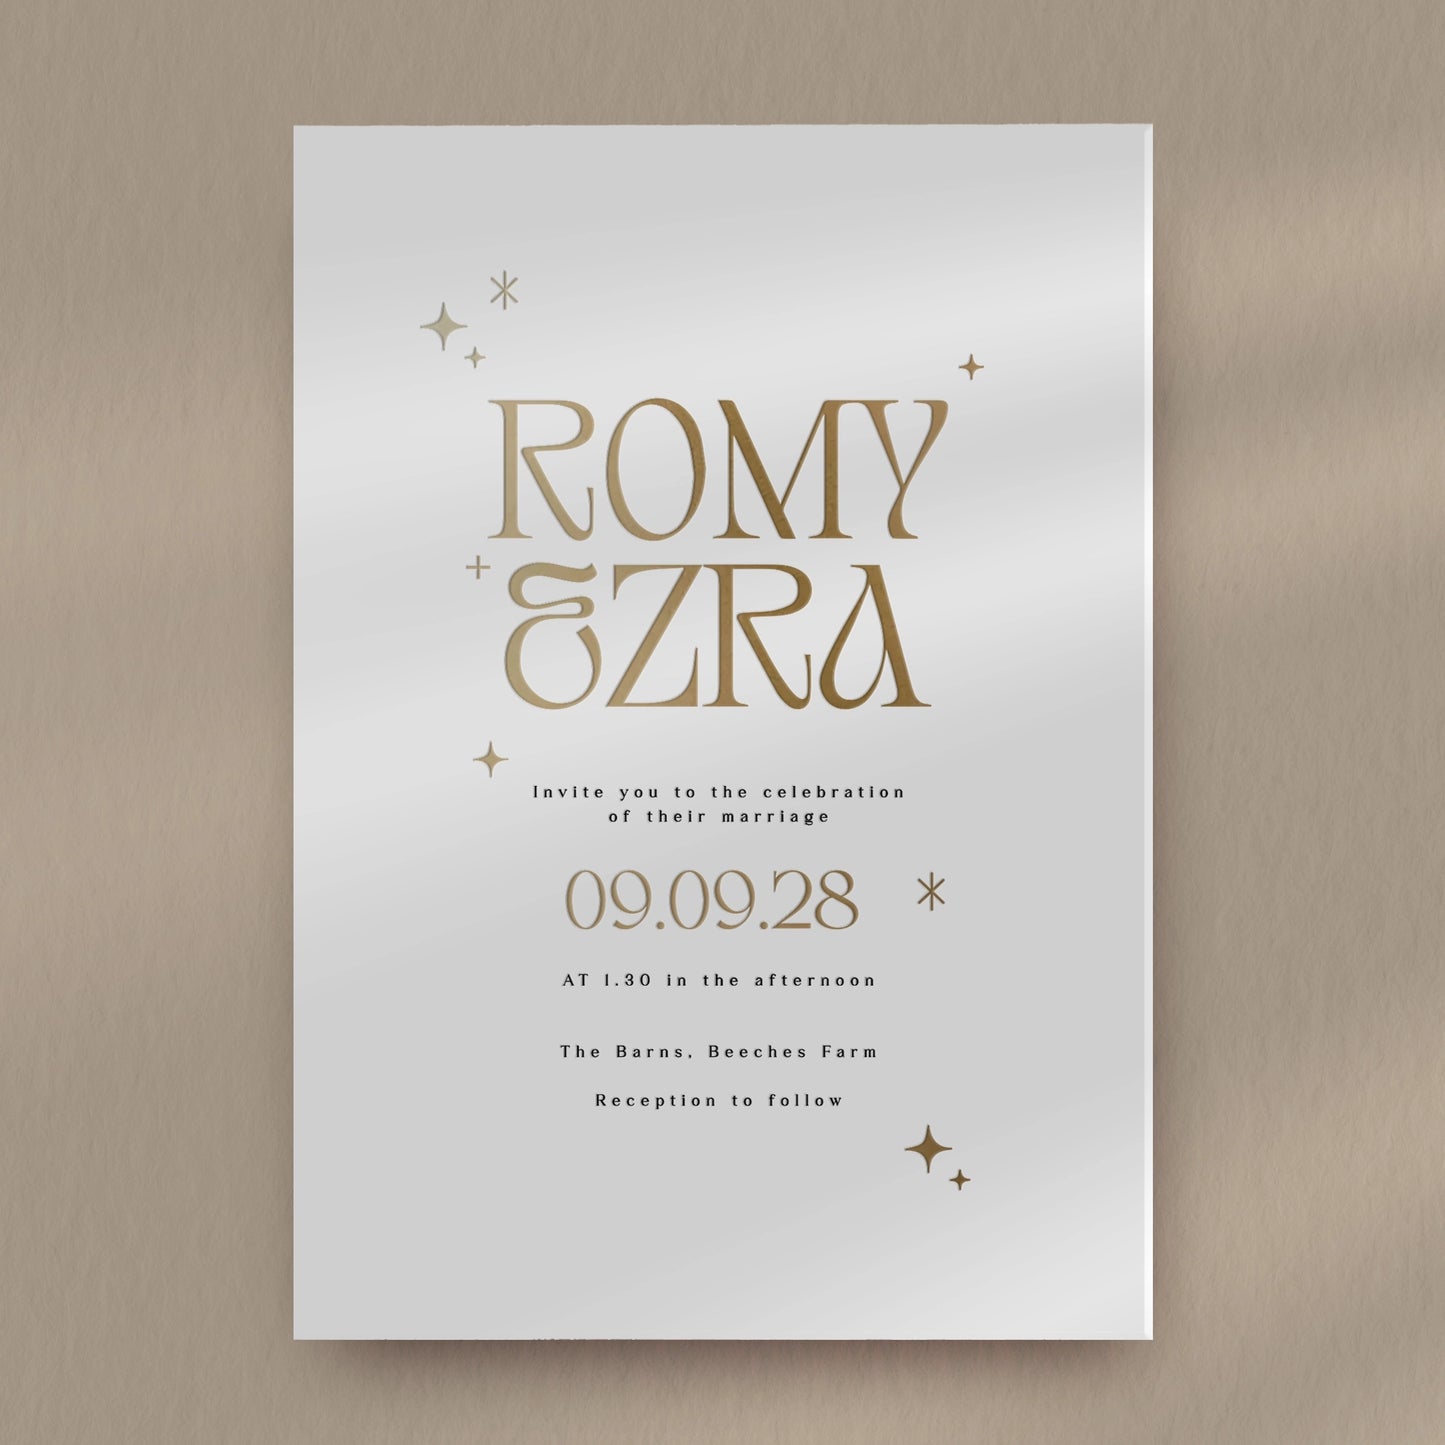 Day Invitation Sample  Ivy and Gold Wedding Stationery Romy  